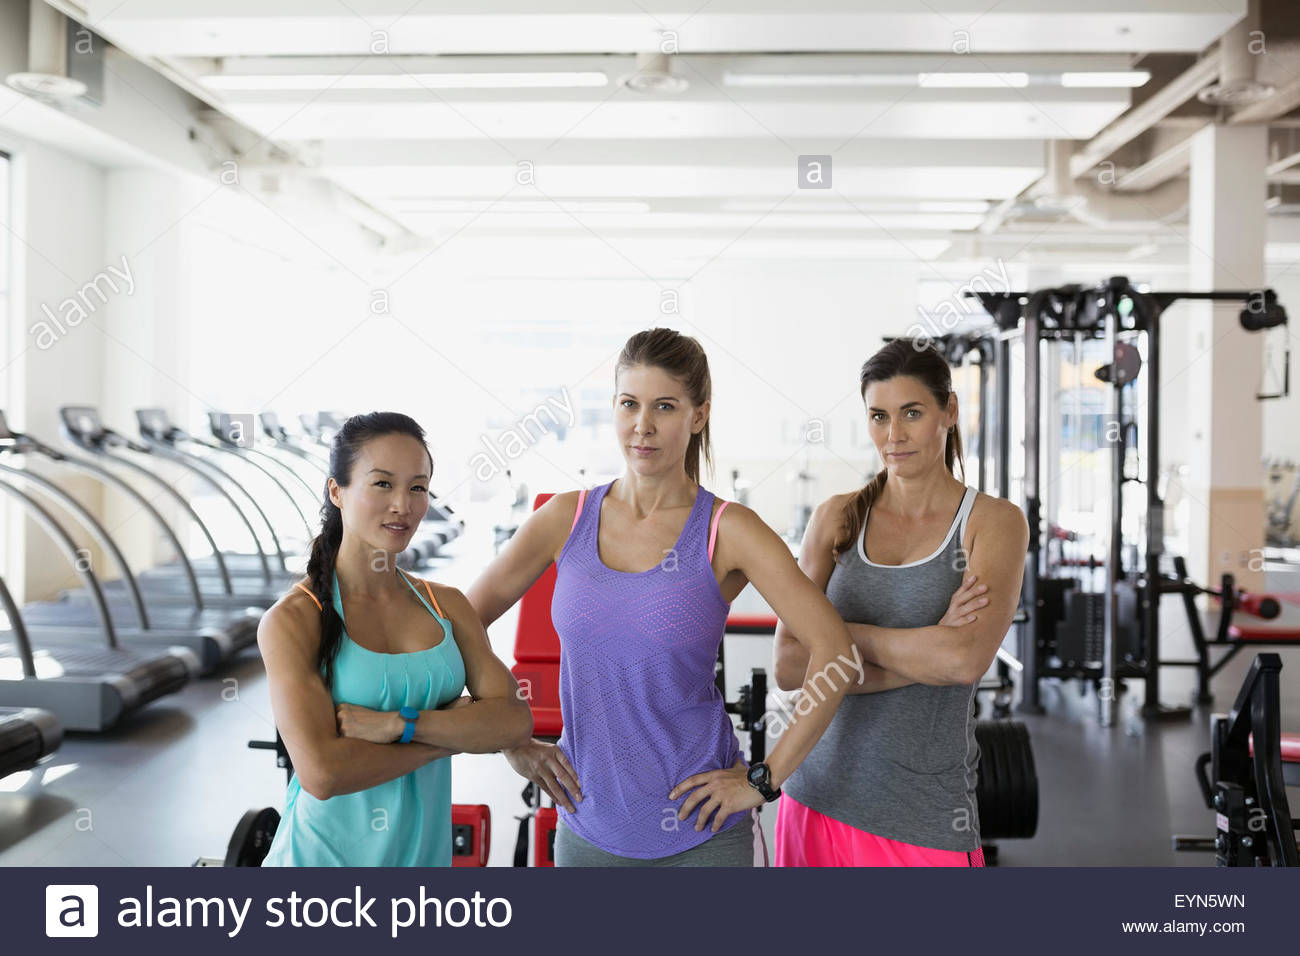 Portrait confident women expressing attitude in gym Stock Photo